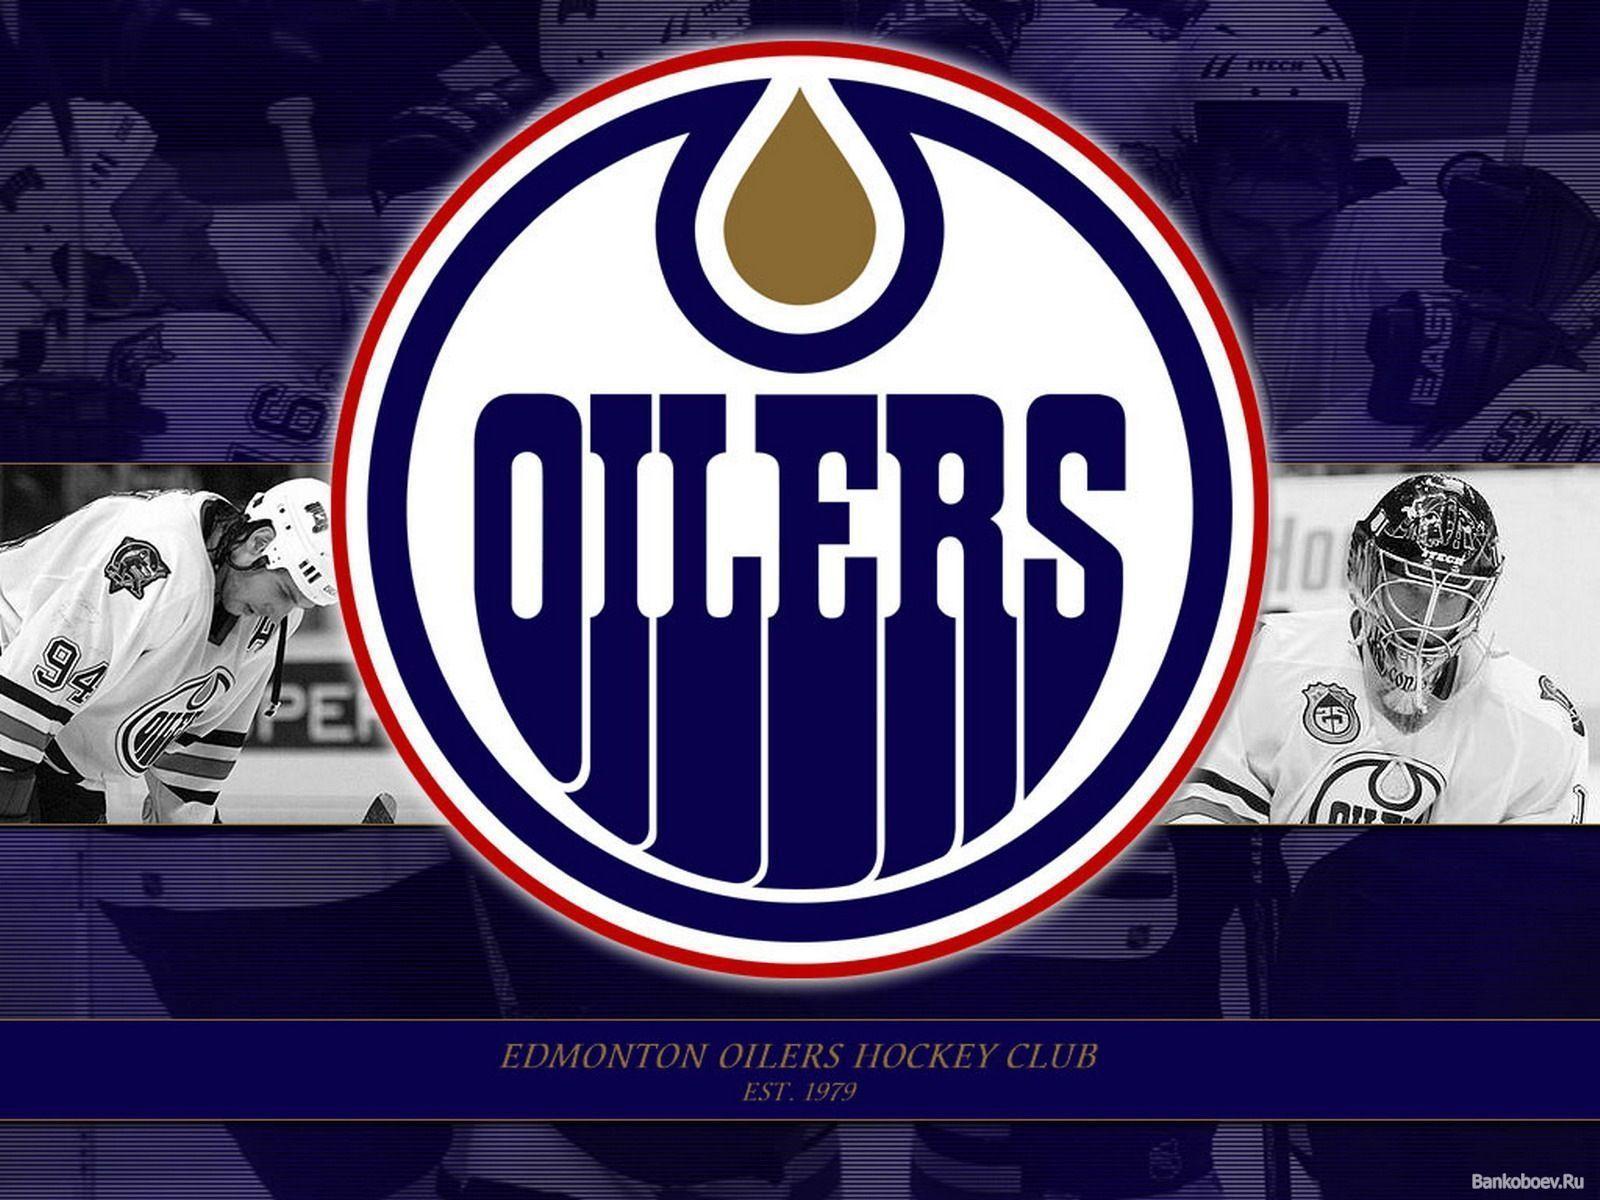 New Edmonton Oilers backgrounds